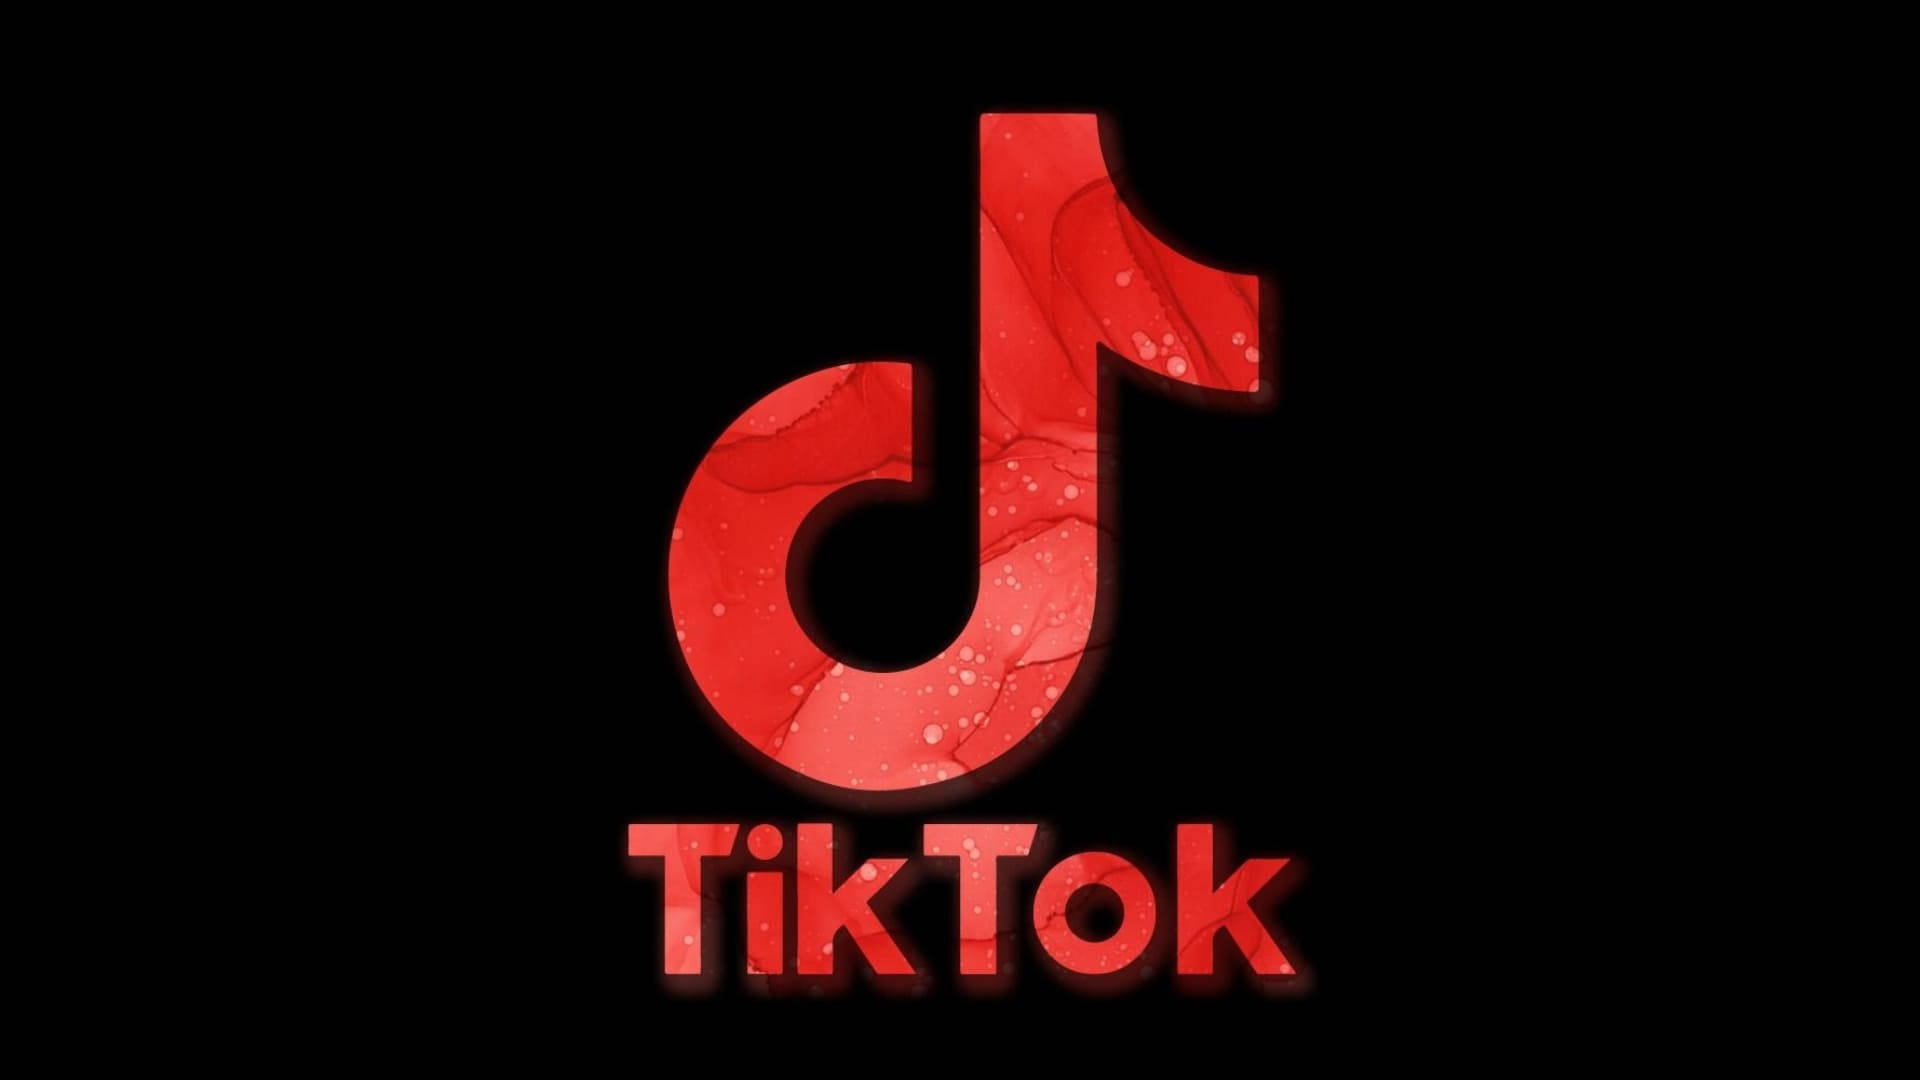 Download Red Aesthetic Tiktok Logo Wallpaper